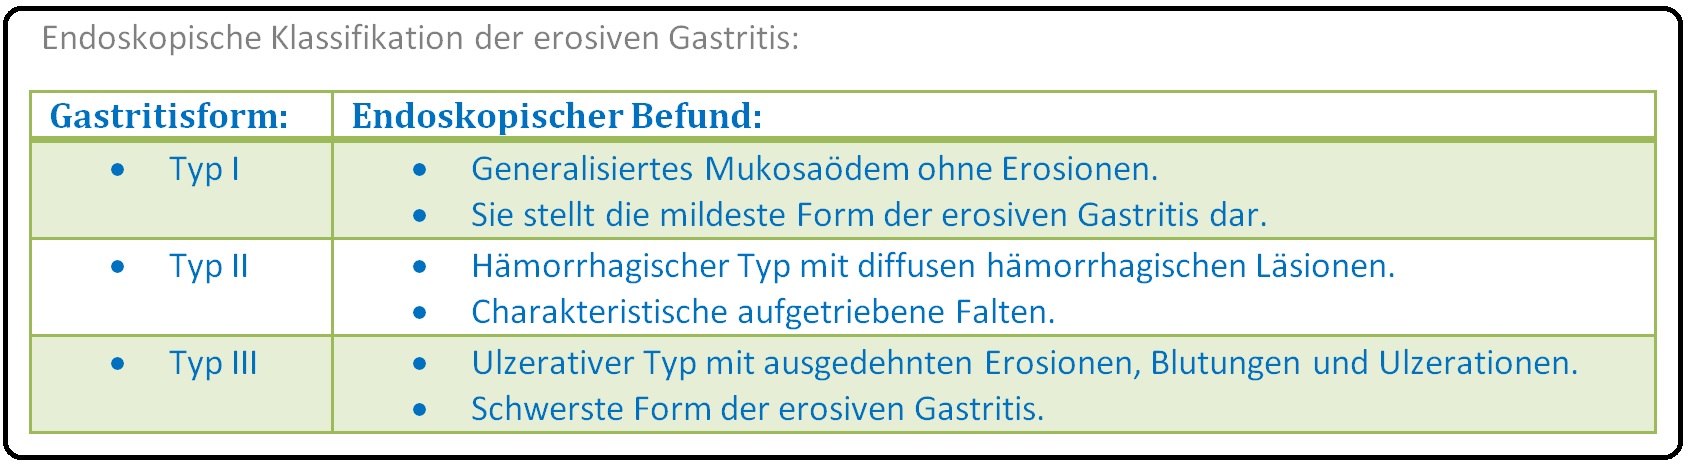 601 Endoskopische Klassifikation der erosiven Gastritis